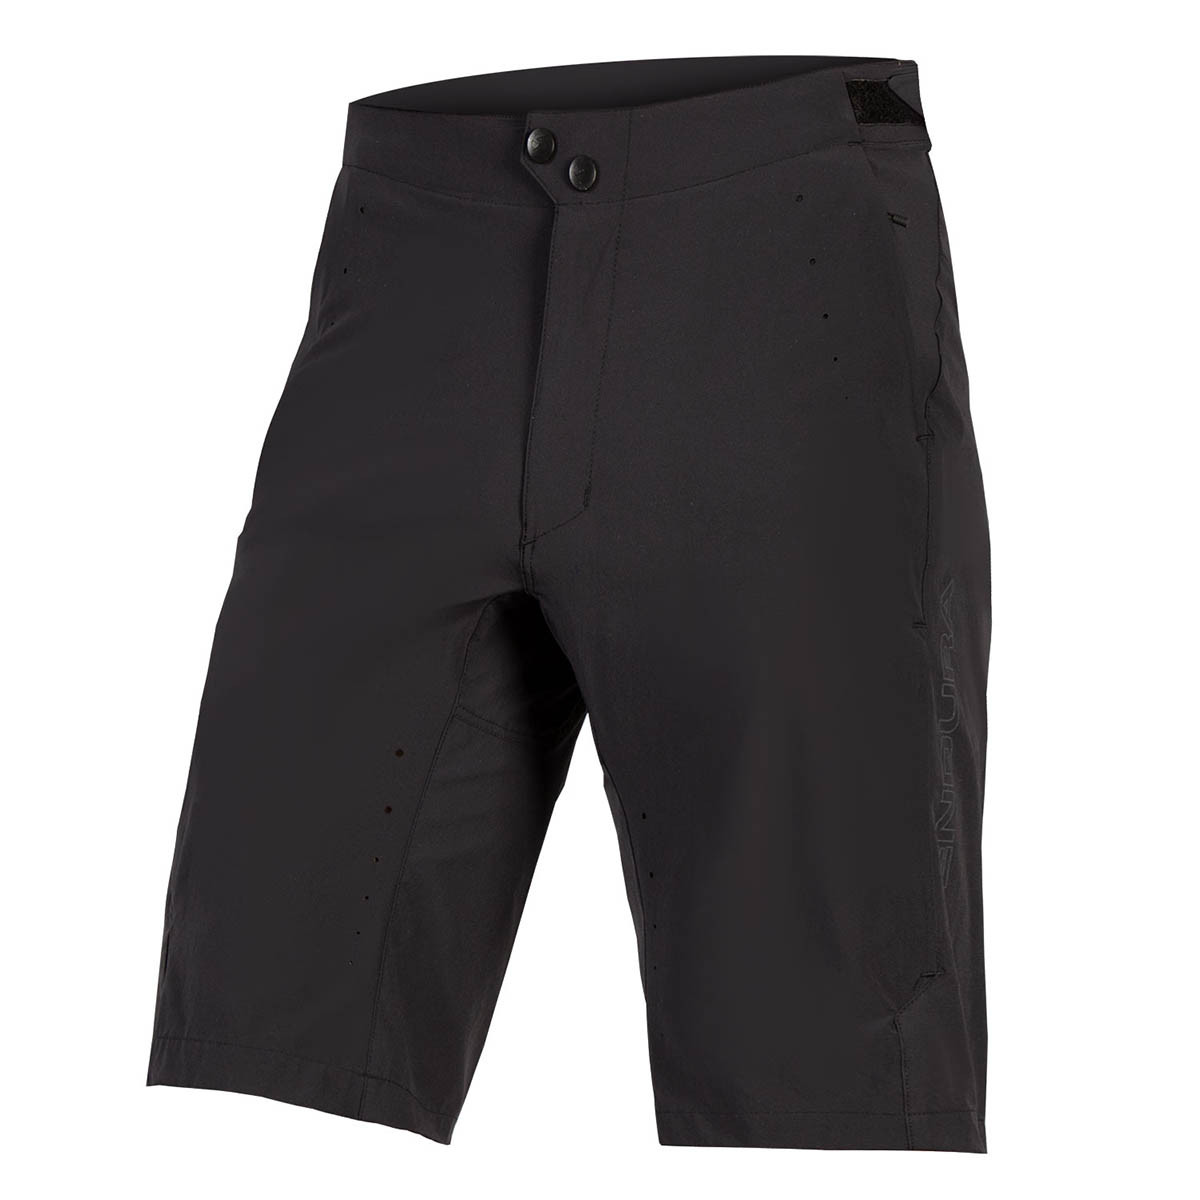 Endura Gv500 Foyle Shorts  - Black